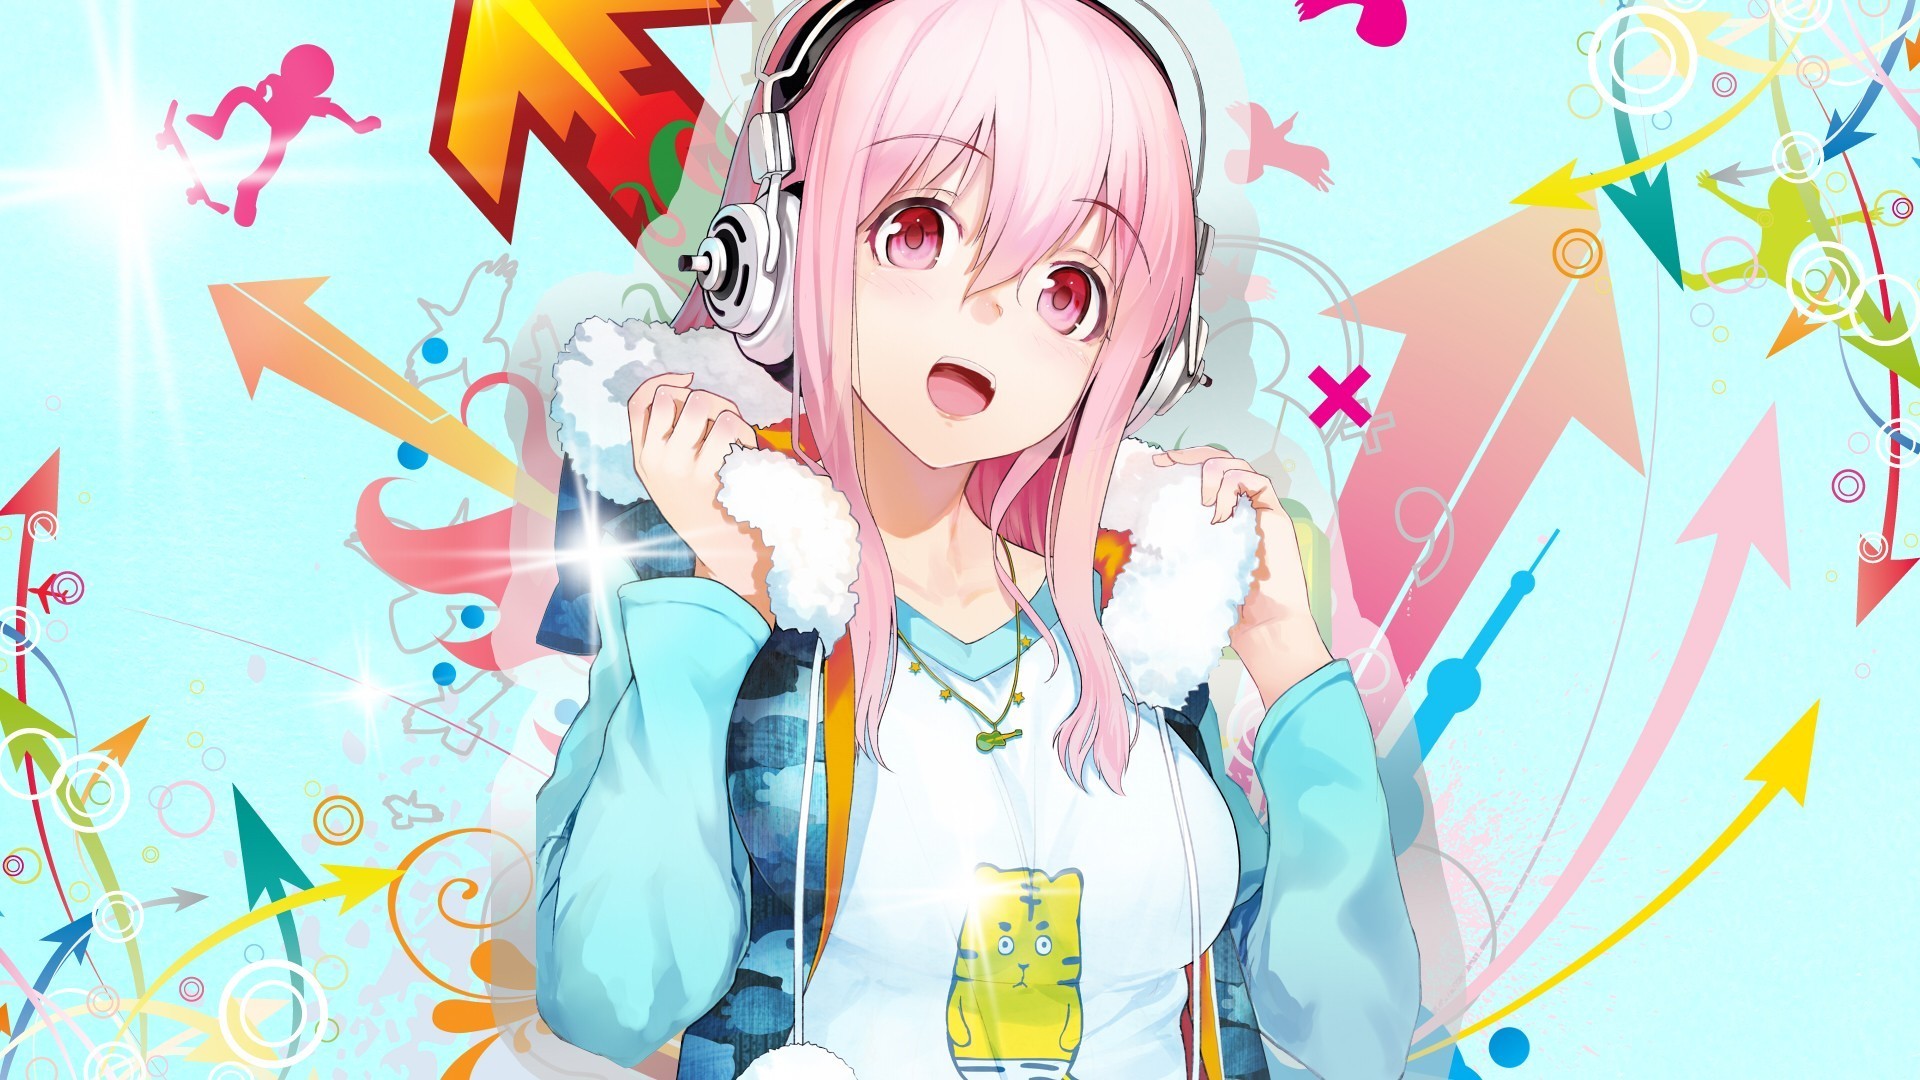 Anime, Music, And Super Sonico Image - Anime Girl Pink Hair Headphones -  1920x1080 Wallpaper 